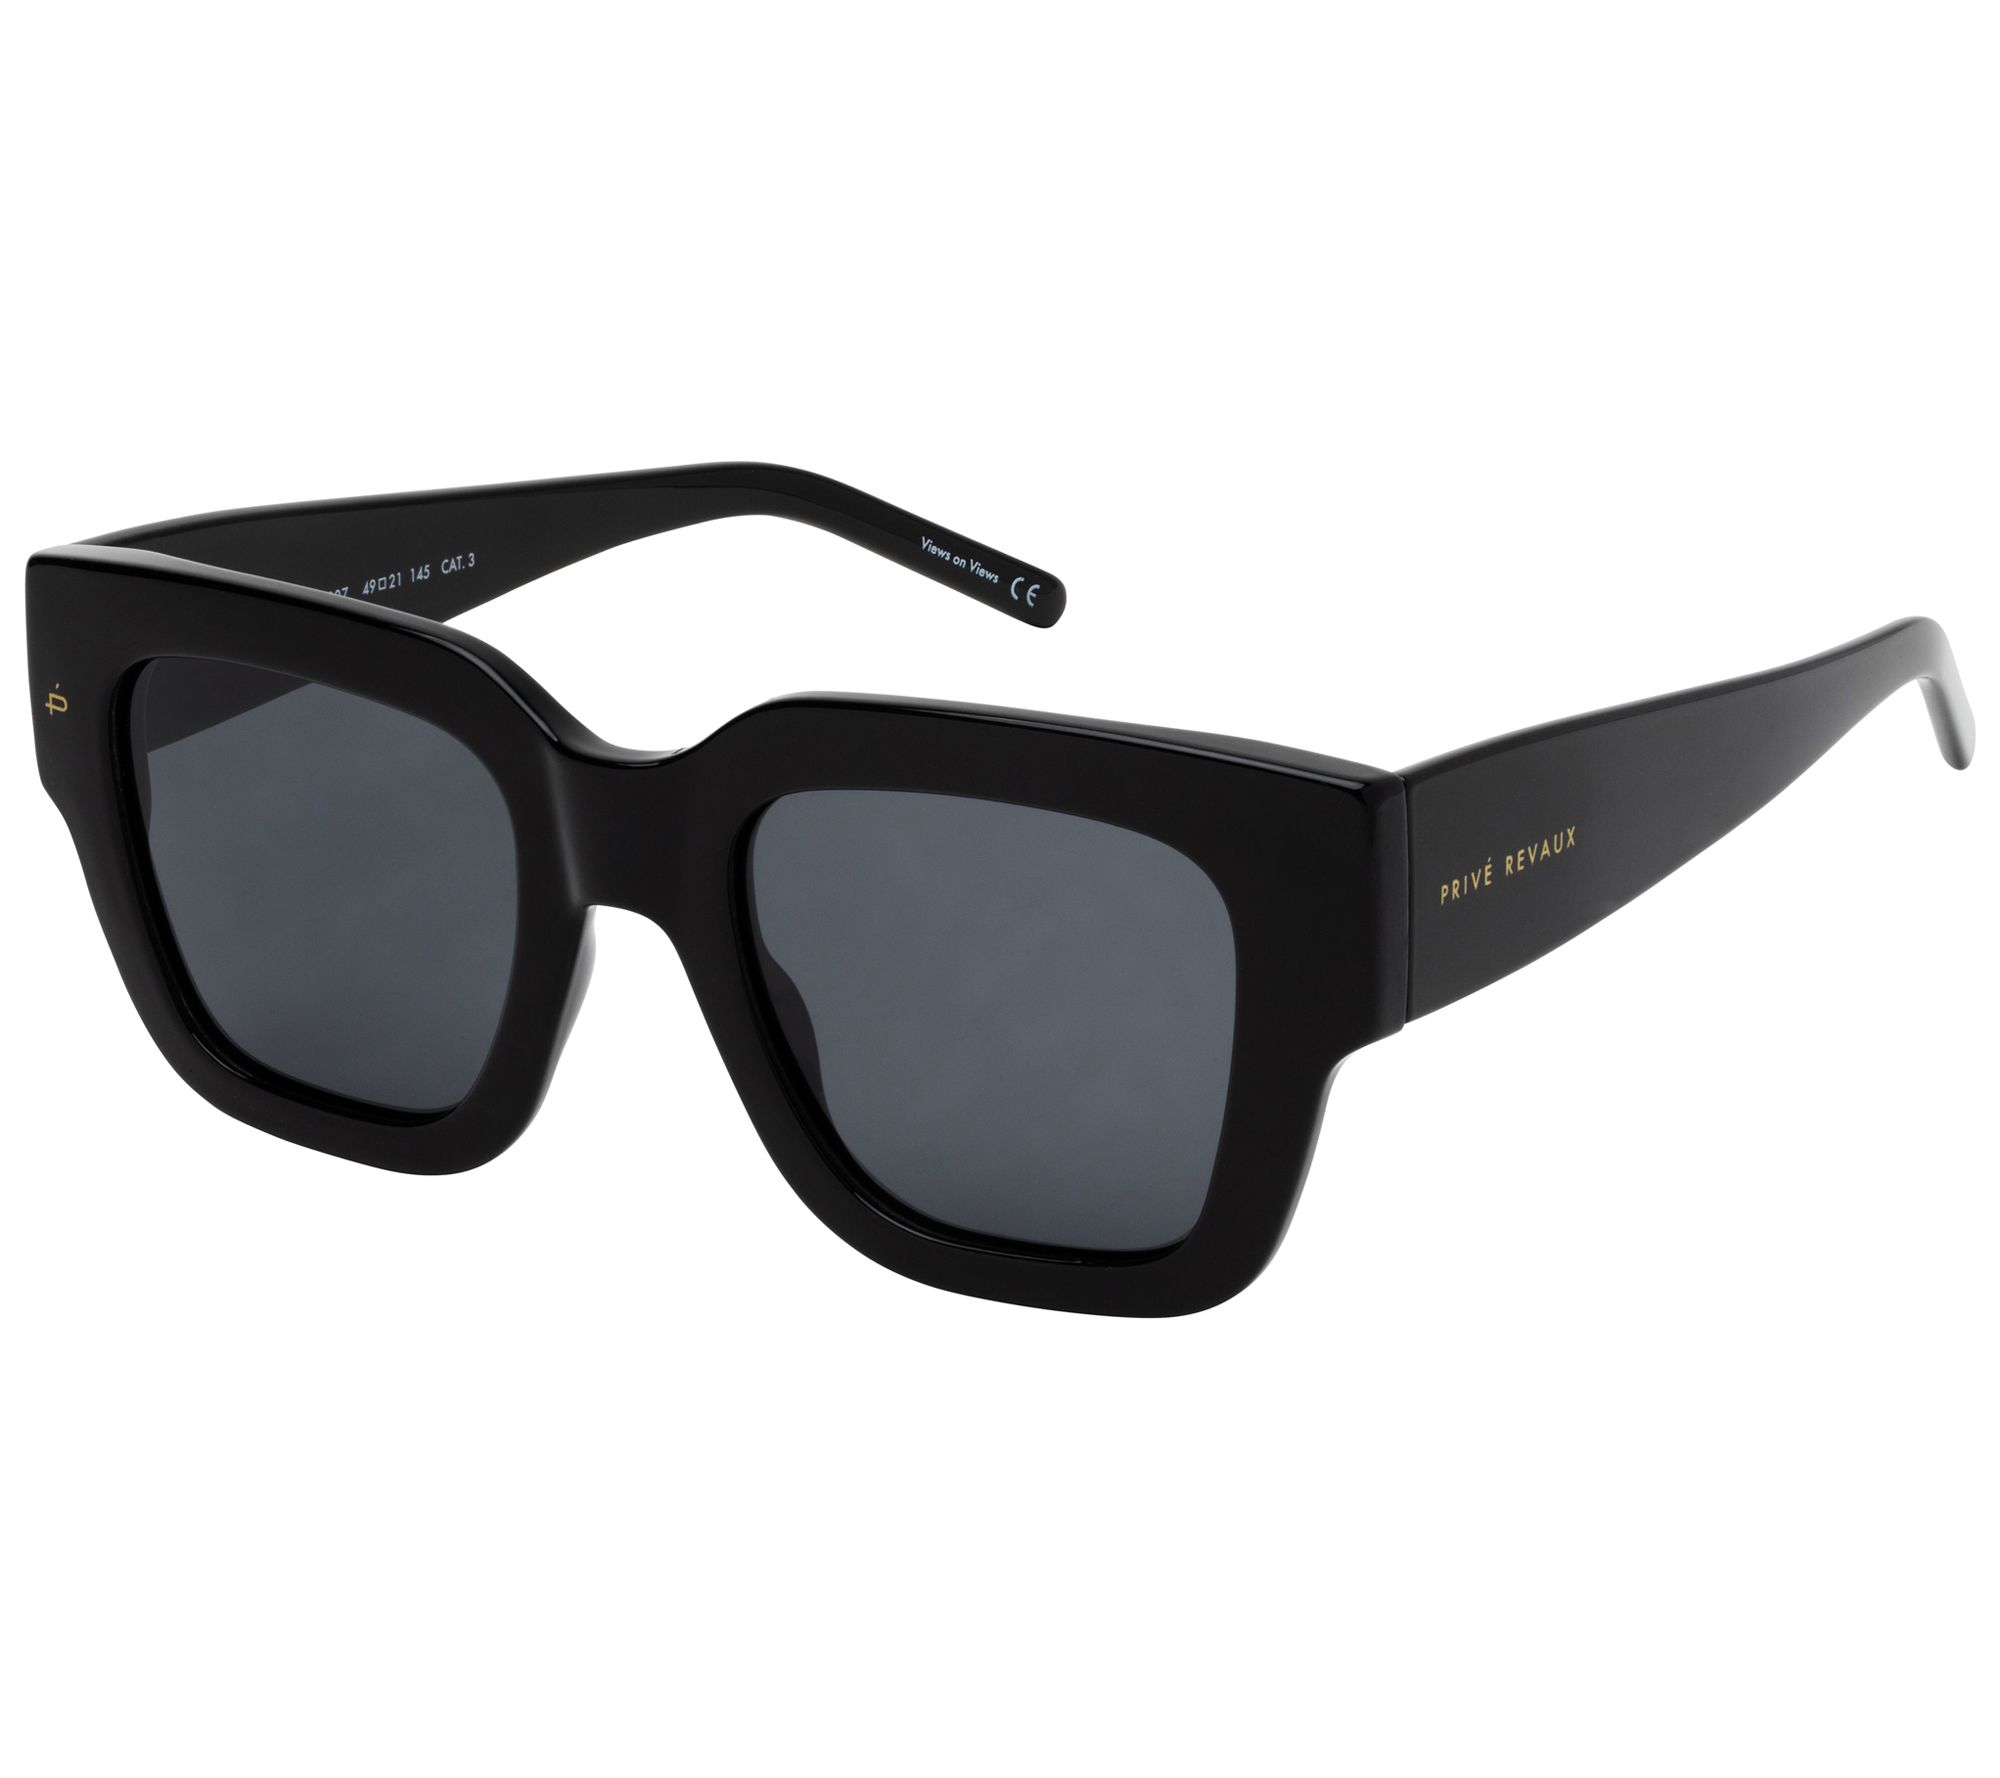 Prive Revaux Square Shape Sunglasses - The New Yorker - QVC.com